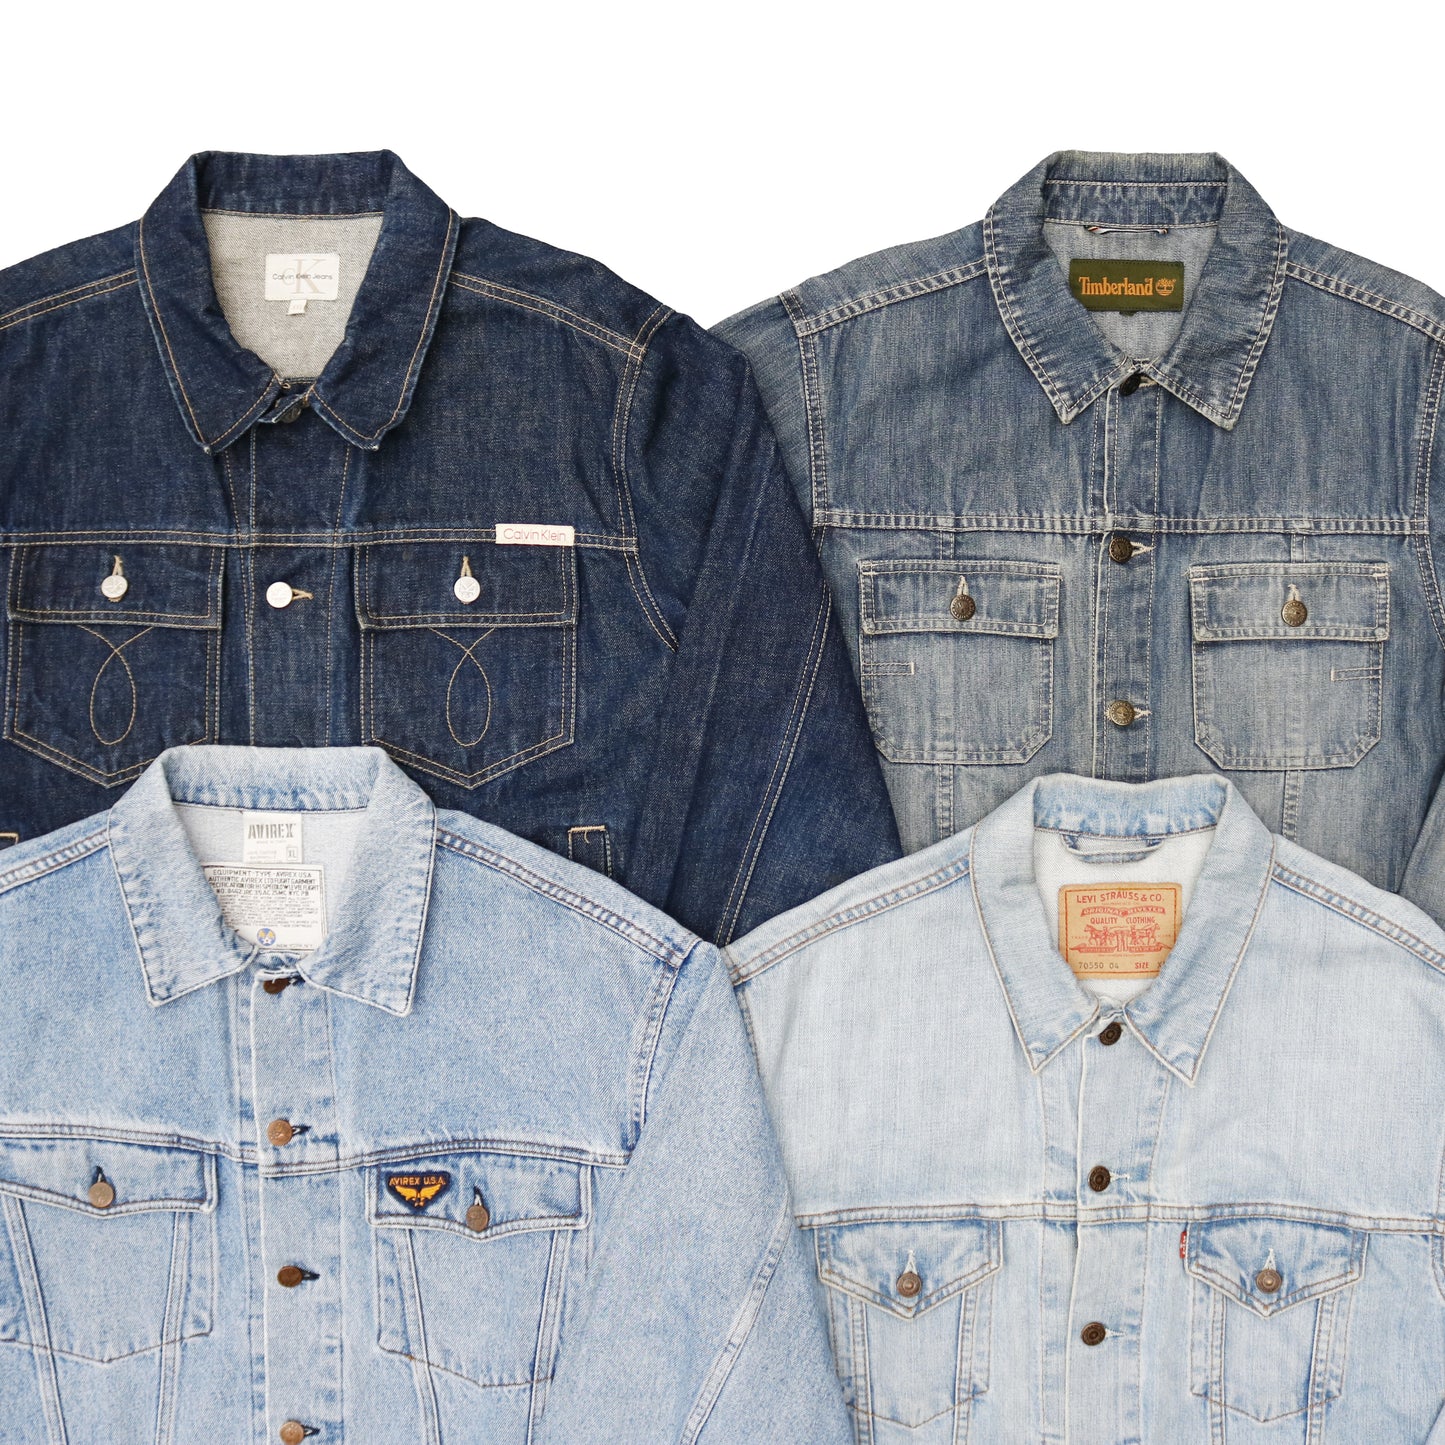 Best Selection of Assorted Branded & Unbranded Jeans Jacket